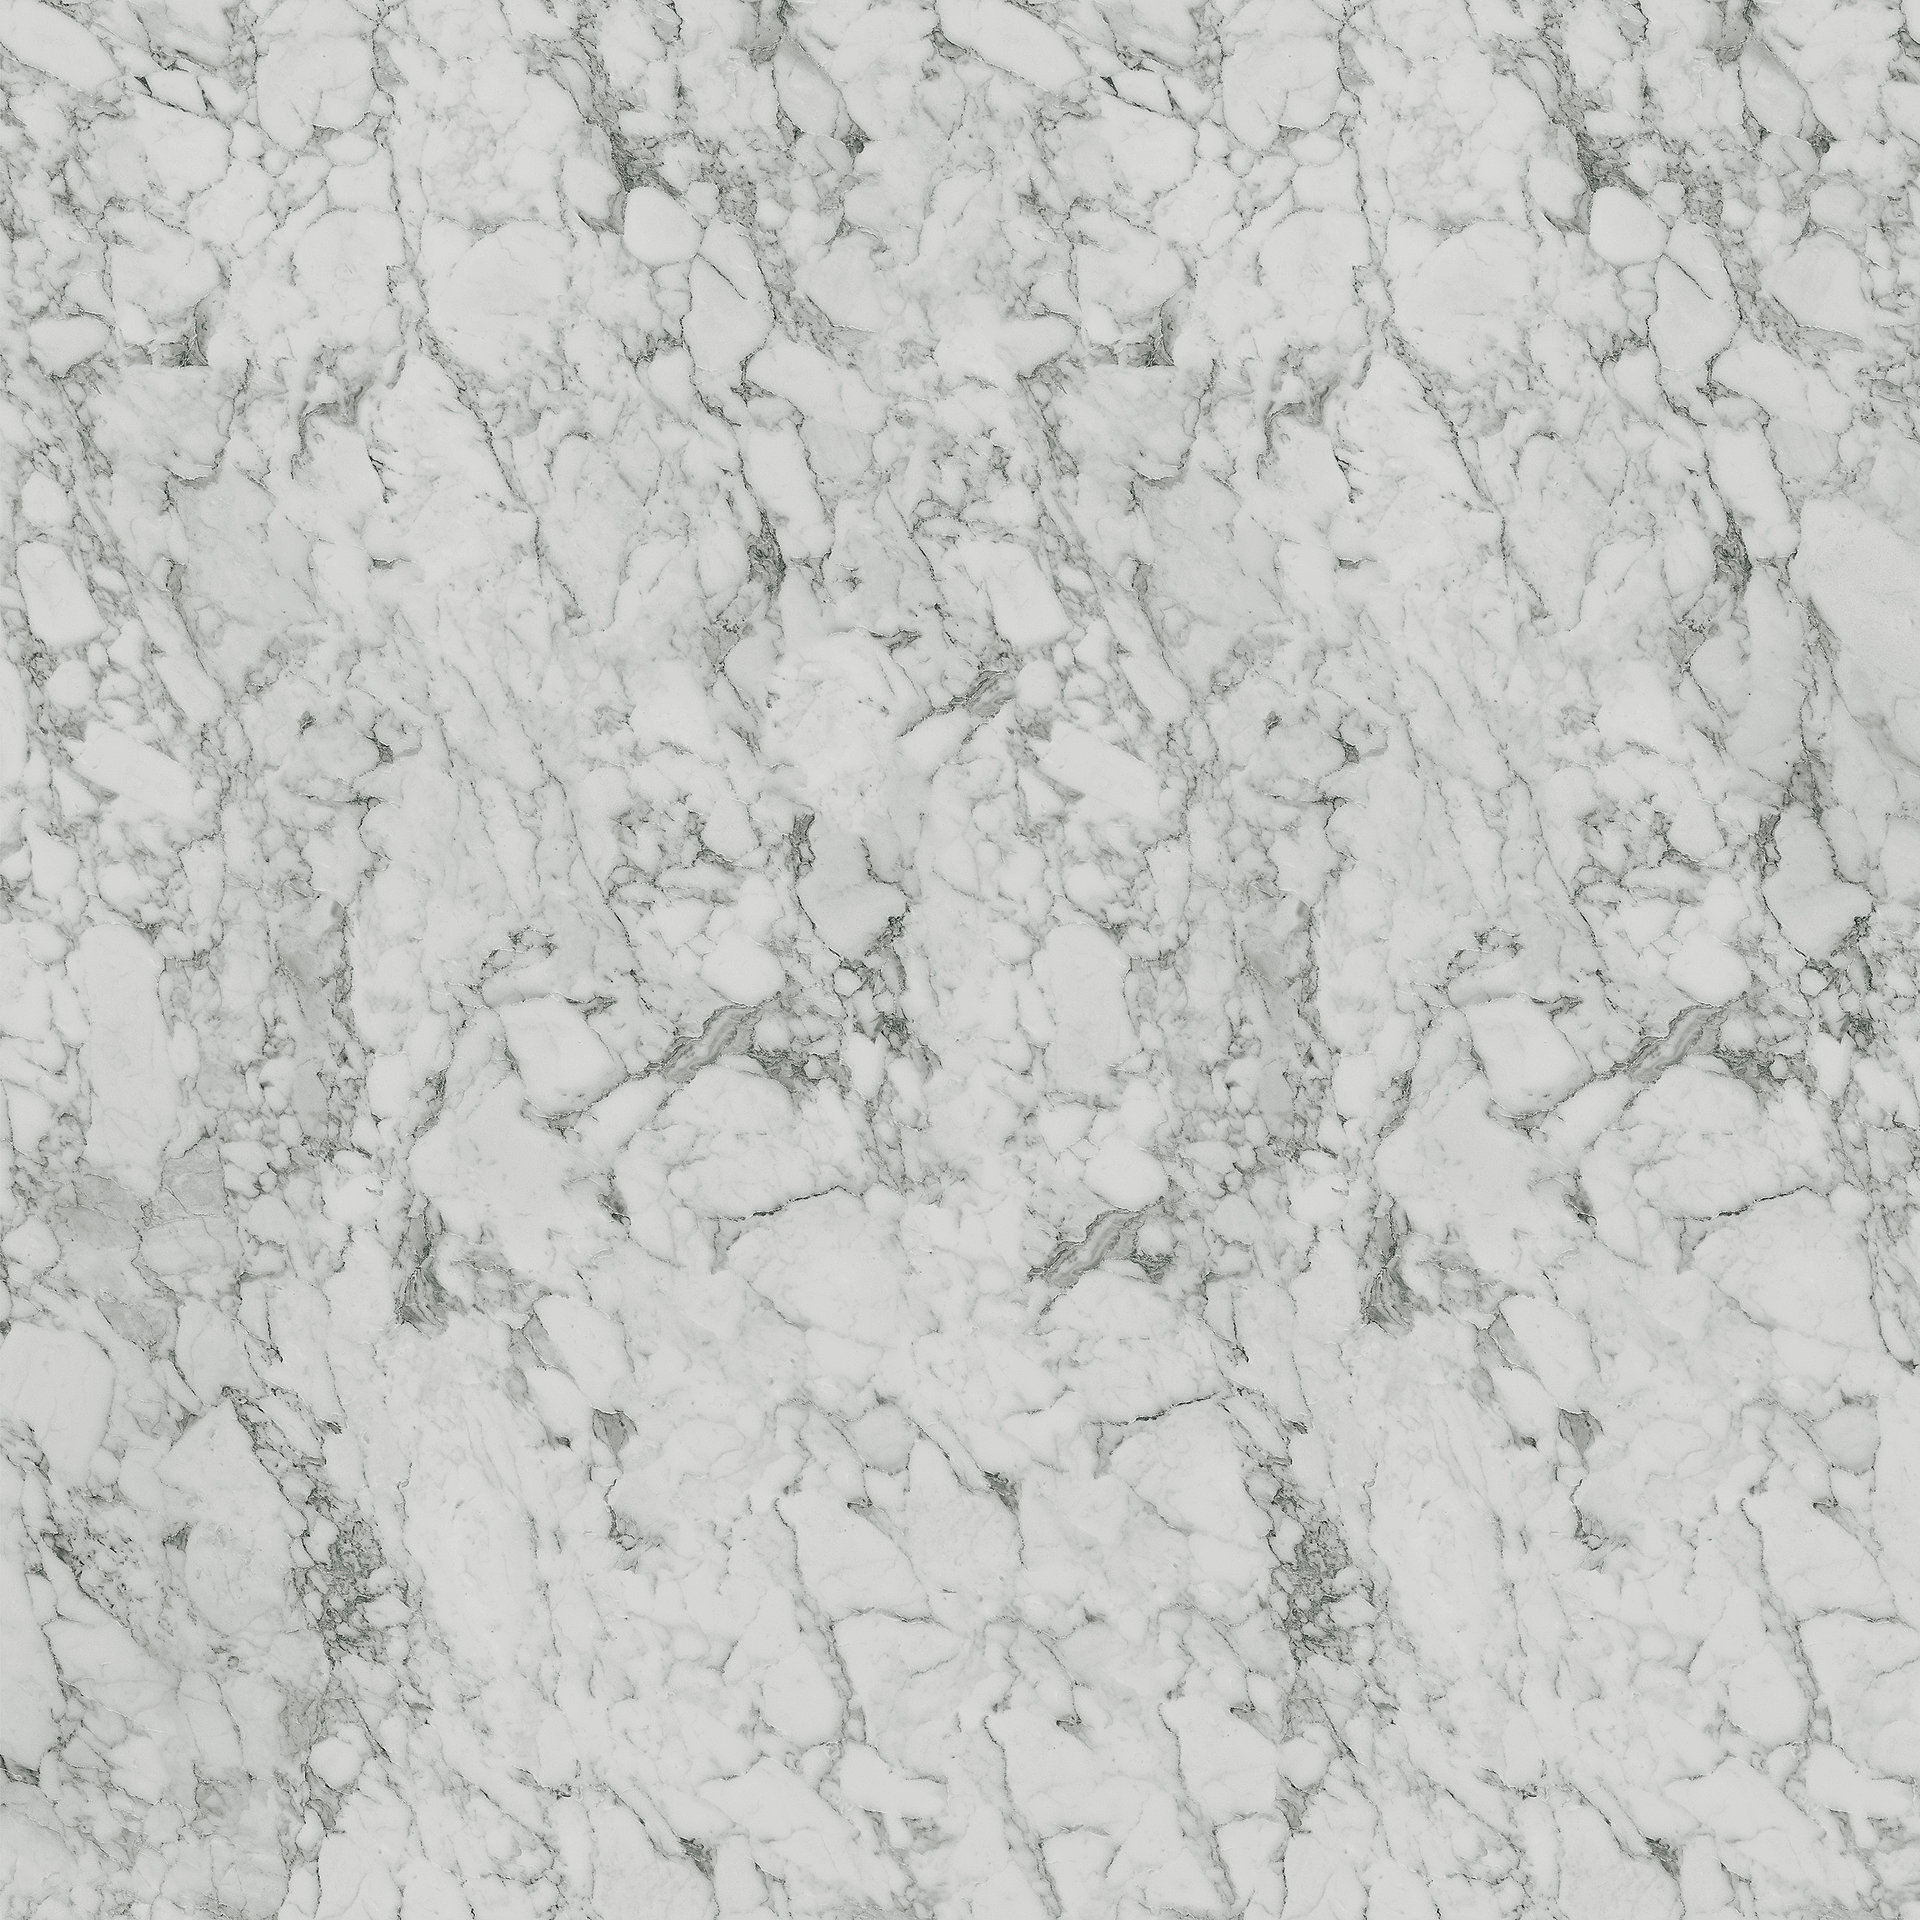 COMPACTPLATTE ARBEITSPLATTE mit grauem Kern S 63009 CM Marmor Carrara  12 mm - 4100 x 640